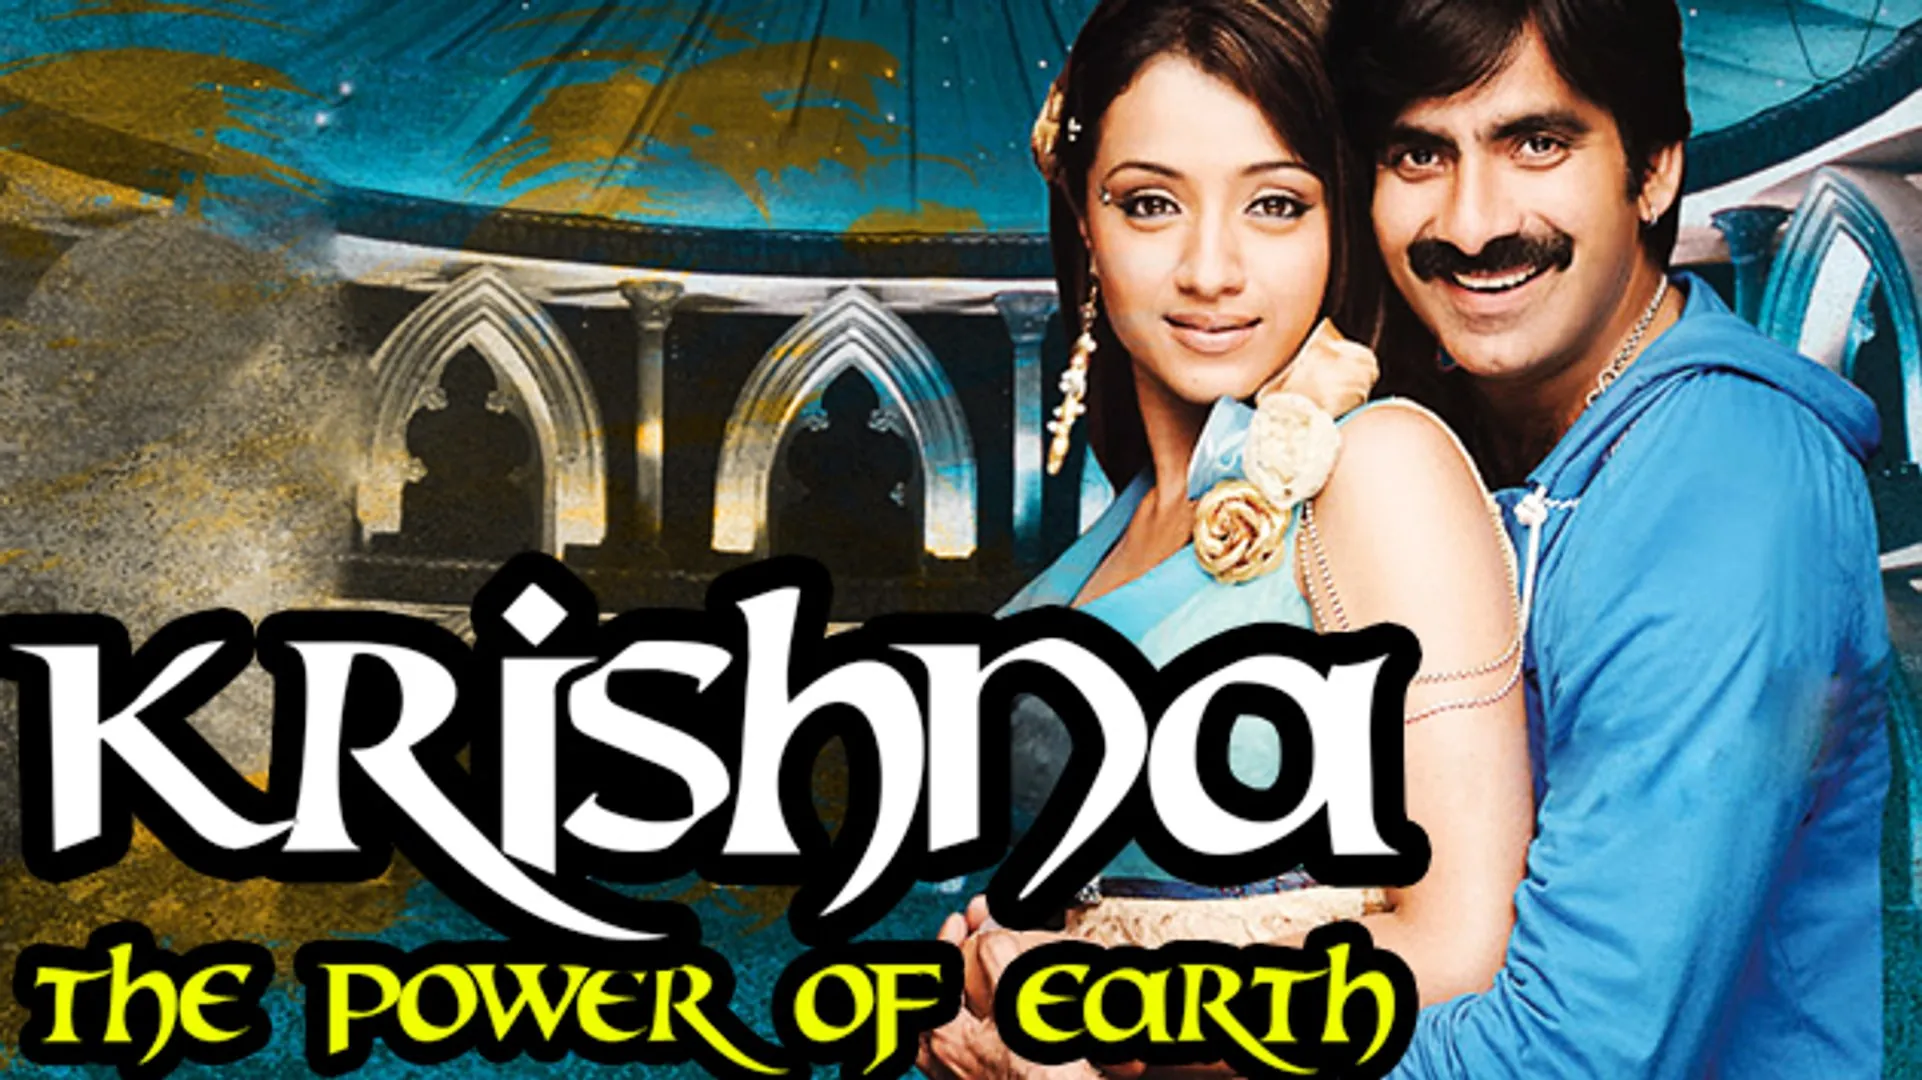 Krishna The Power of Earth